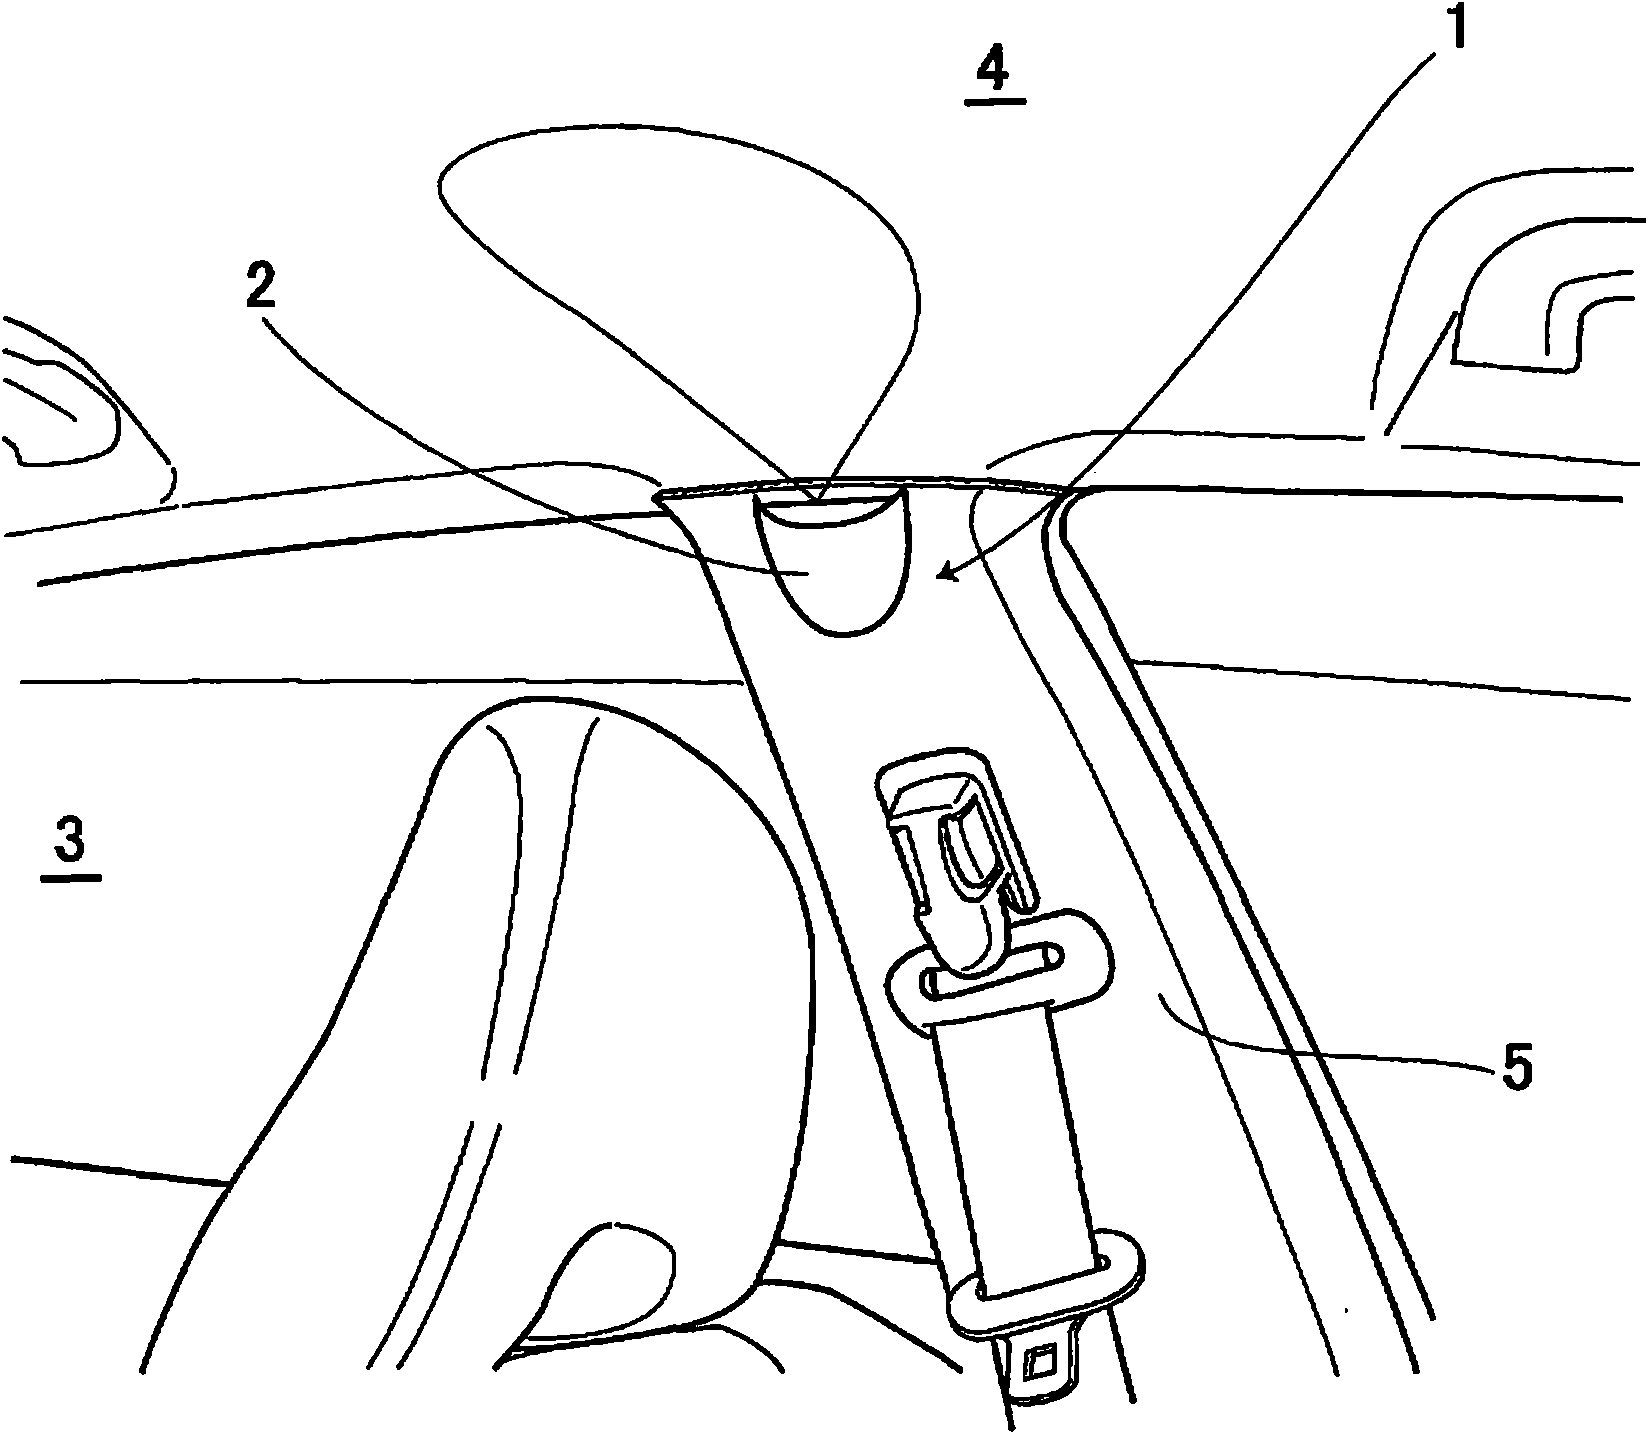 In-vehicle illuminating device